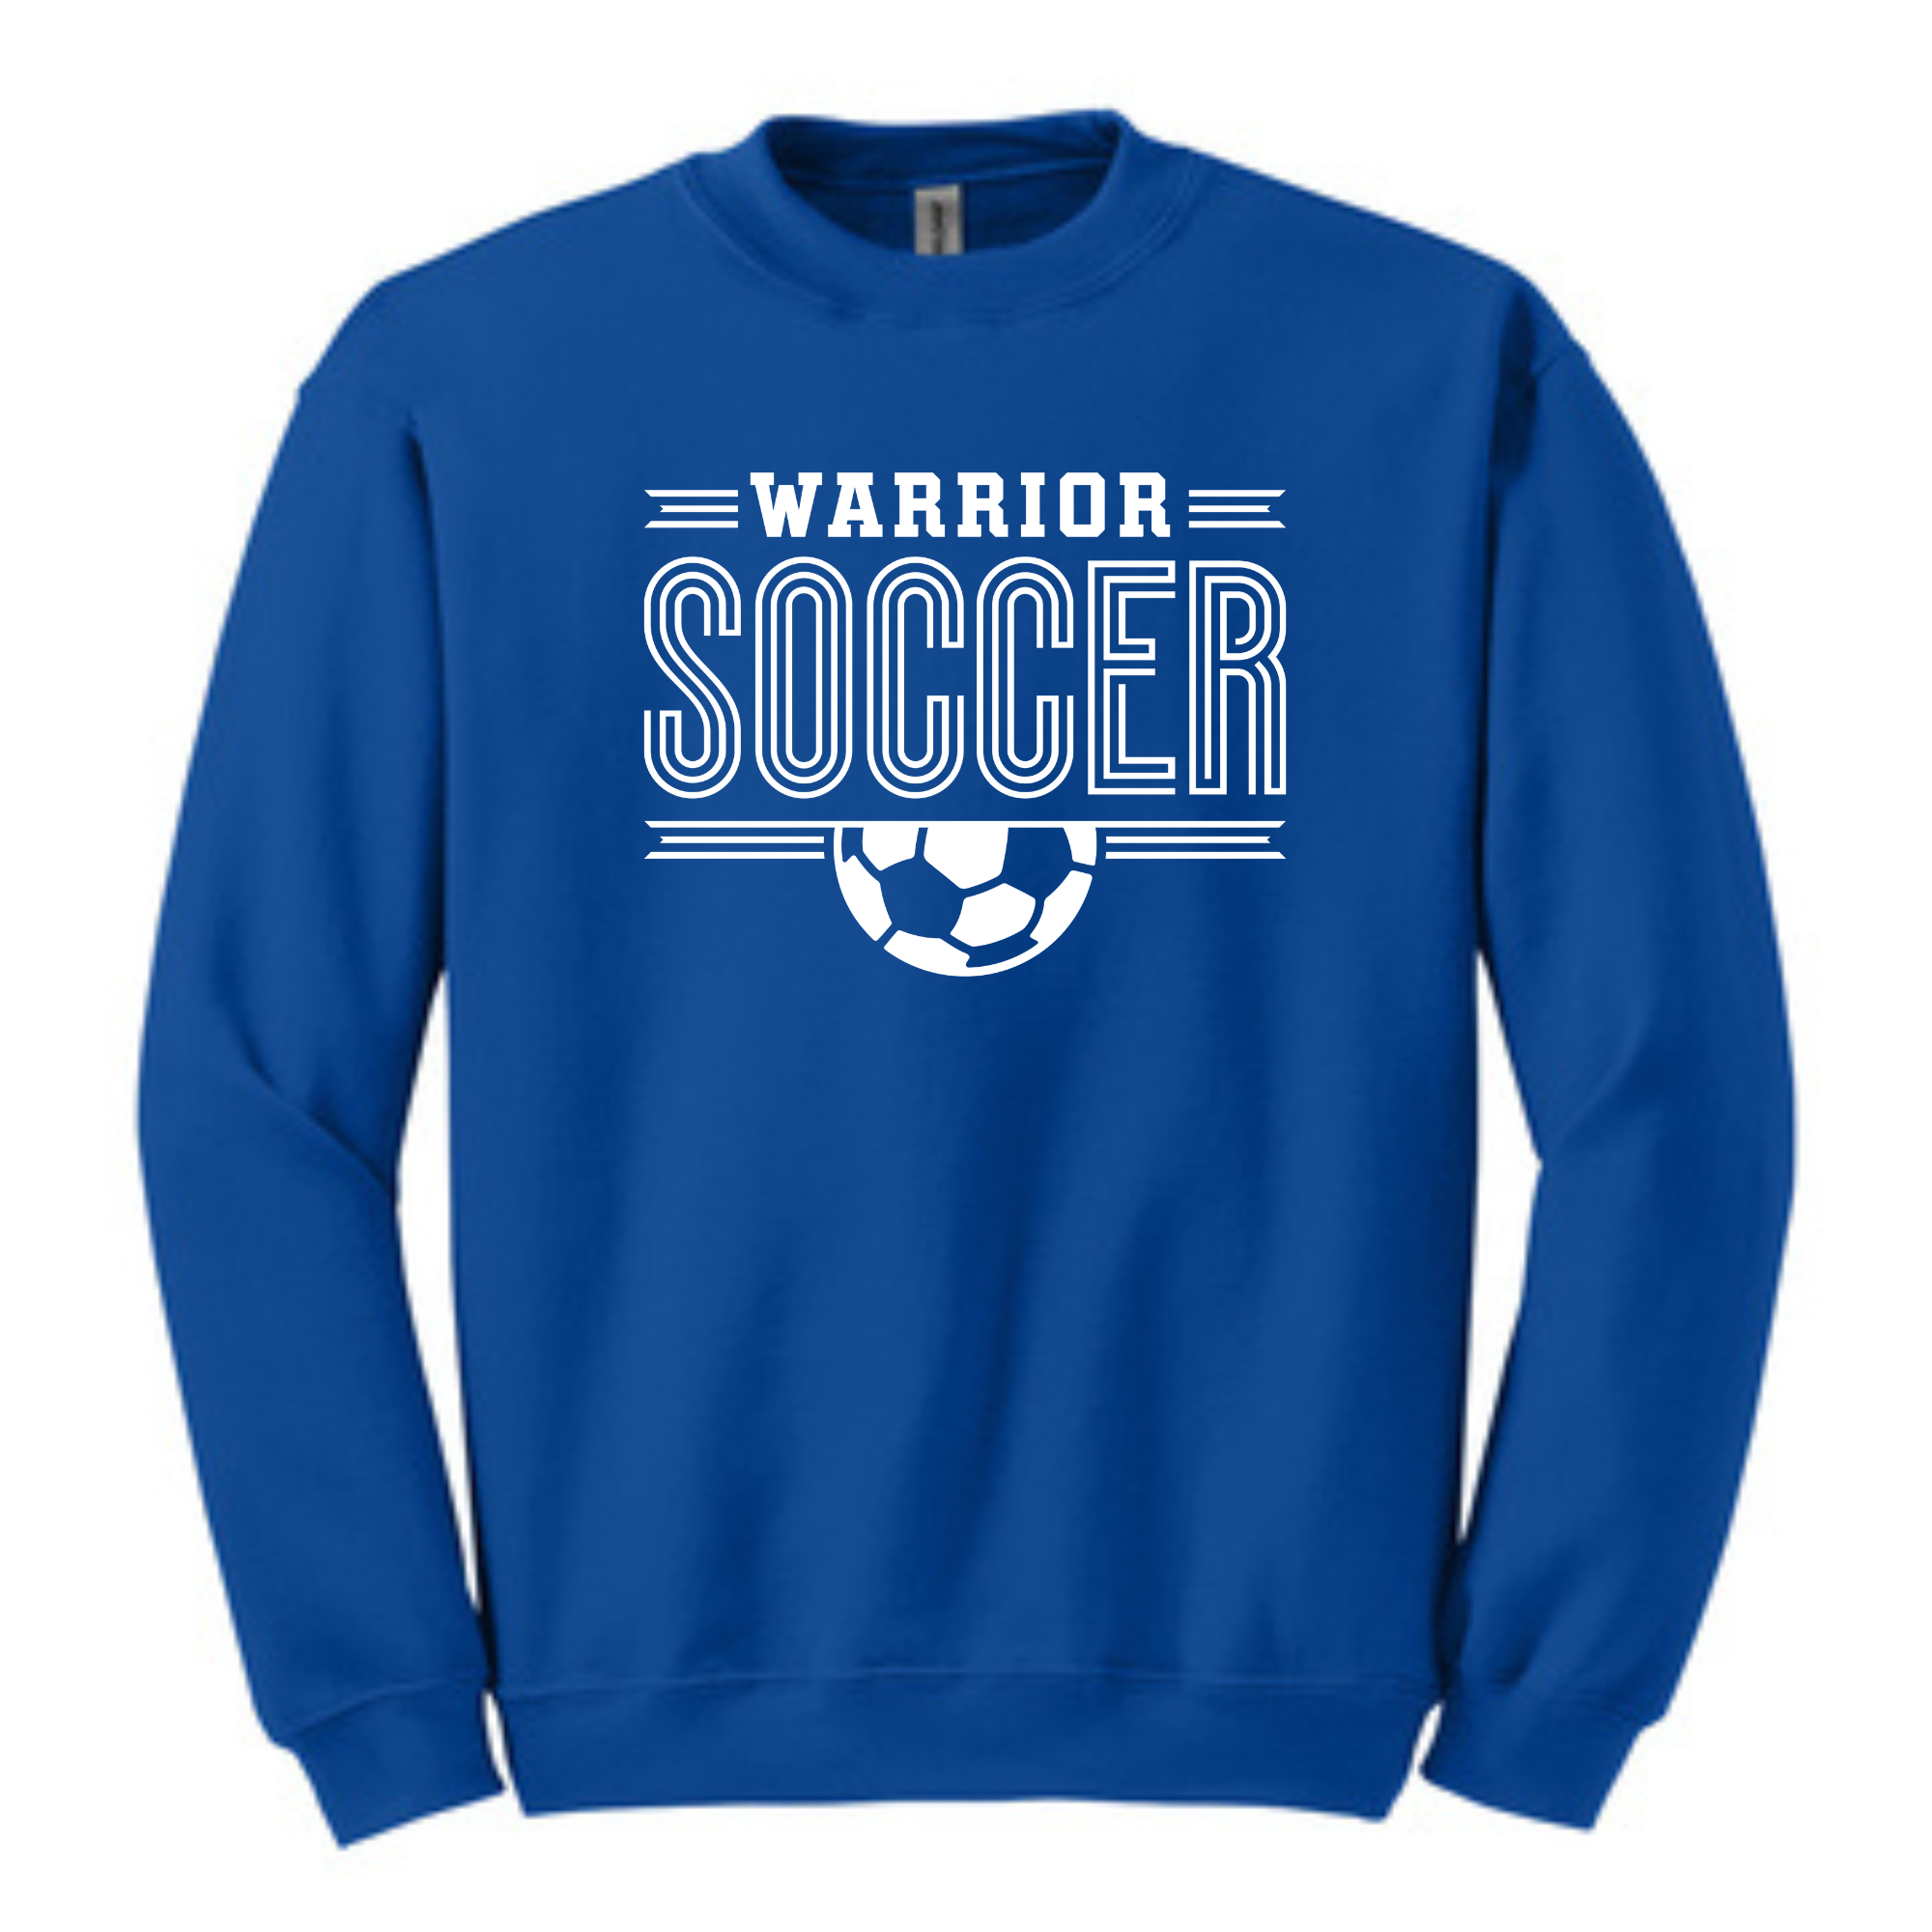 Warrior Soccer Crewneck Sweatshirt- 18000